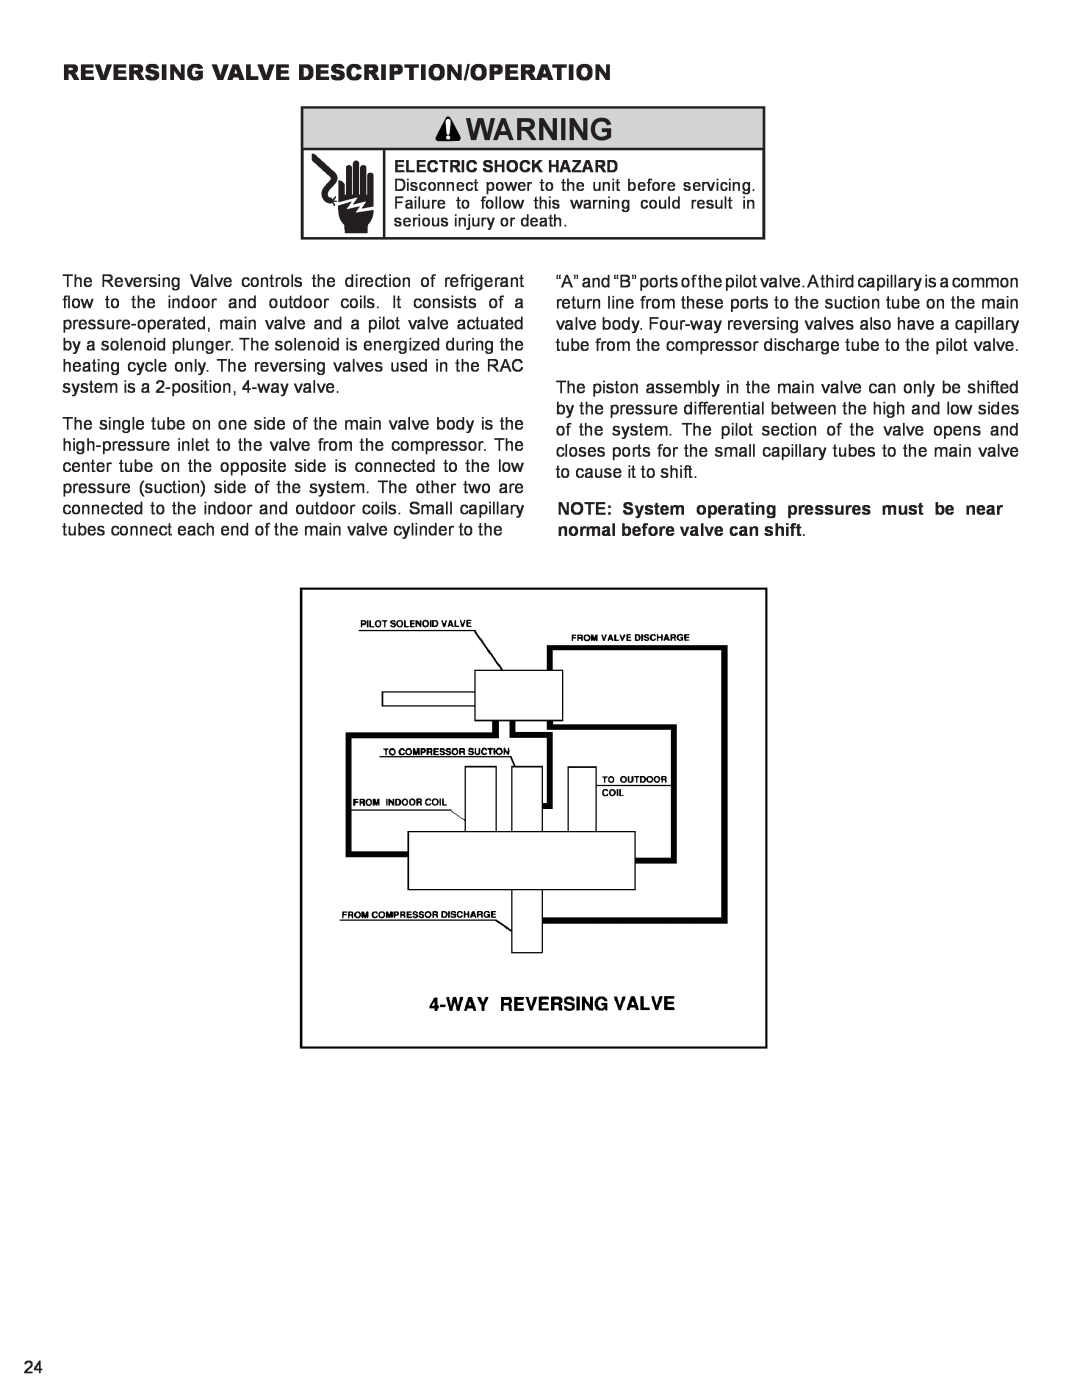 Friedrich 2008, 2009 service manual Reversing Valve Description/Operation, Electric Shock Hazard 